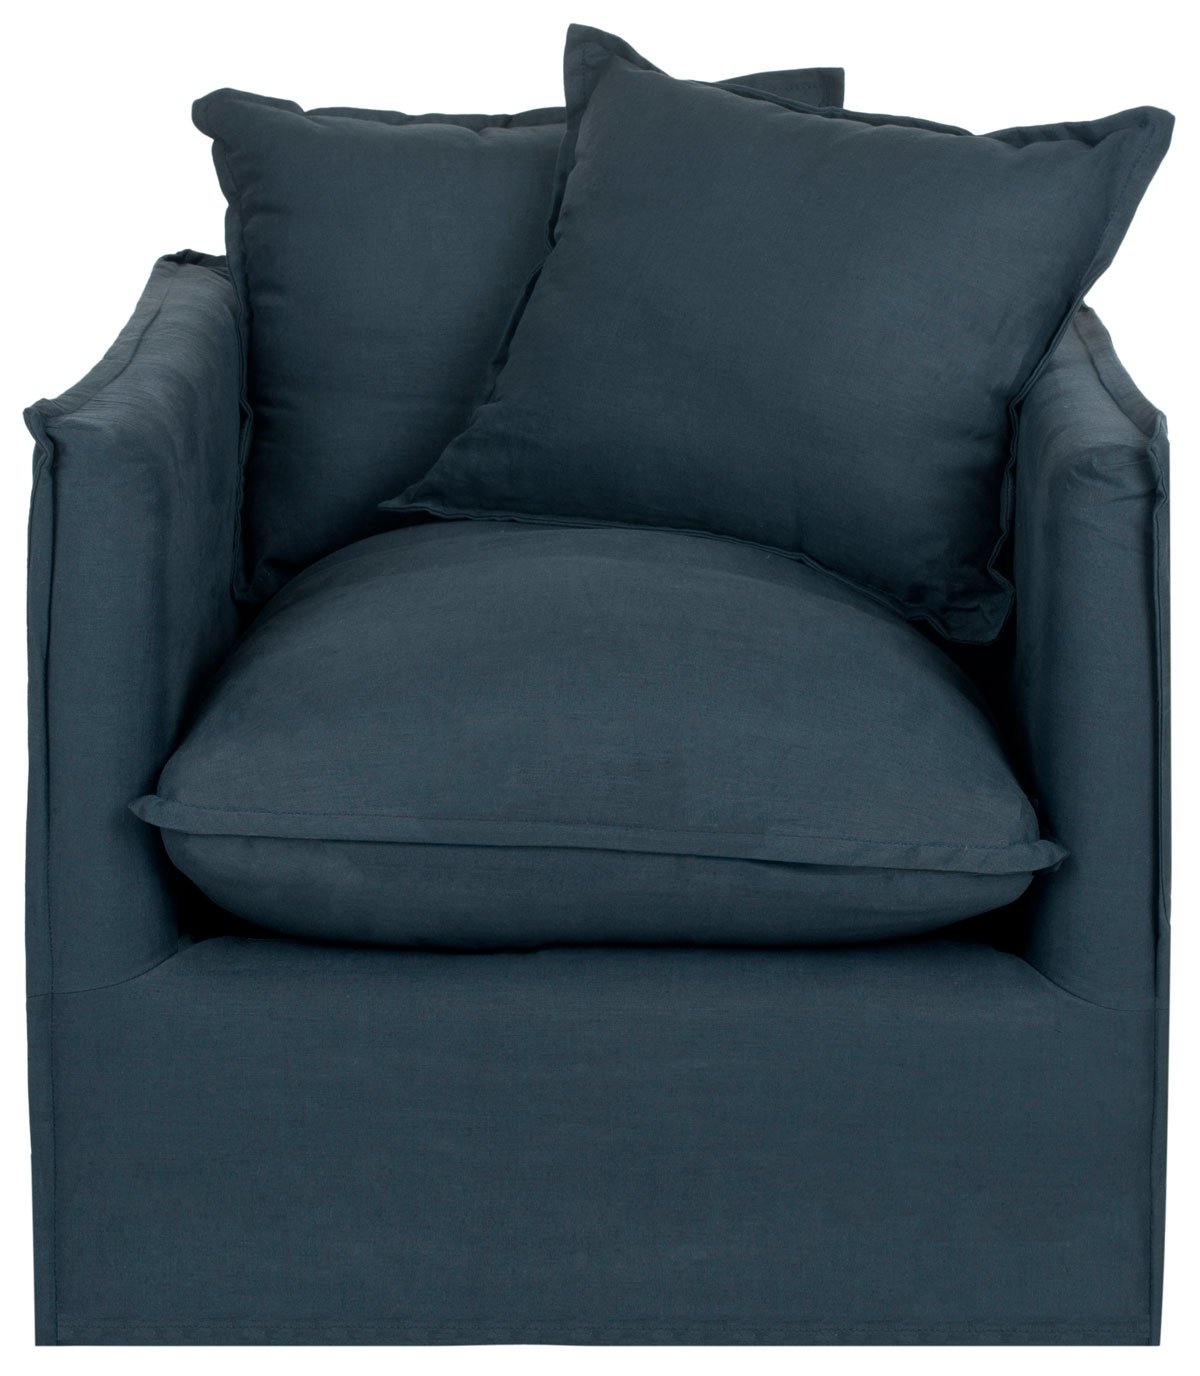 Joey Arm Chair, Dark Blue - Image 2